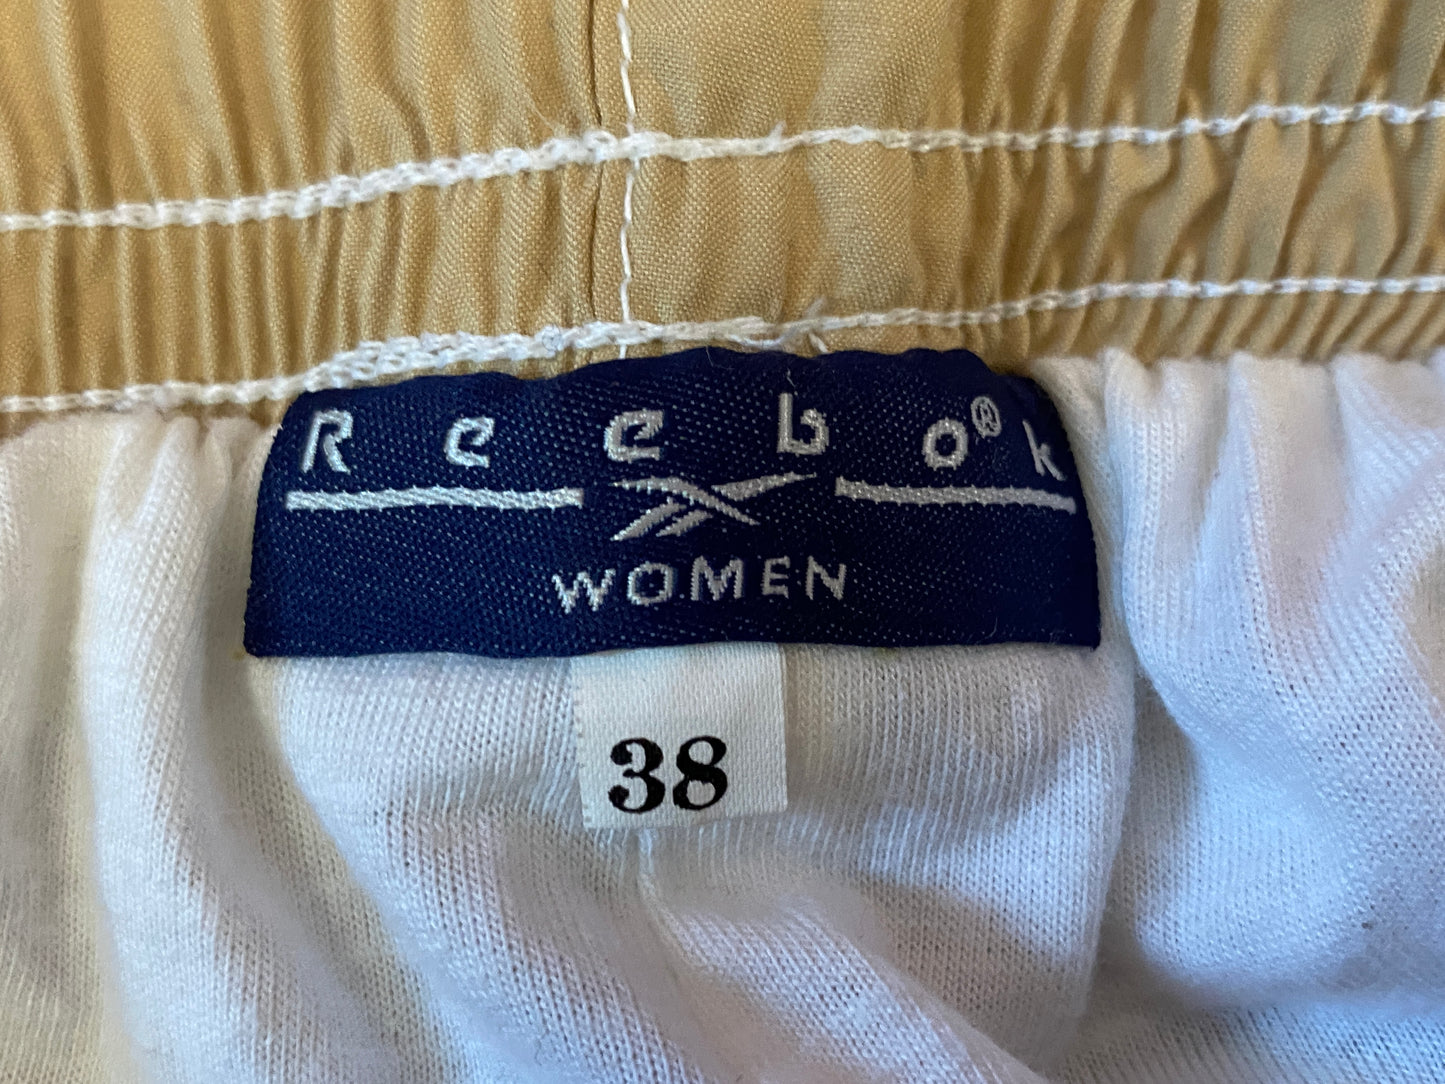 Reebok Vintage Women's Track Pants - M Beige Polyester